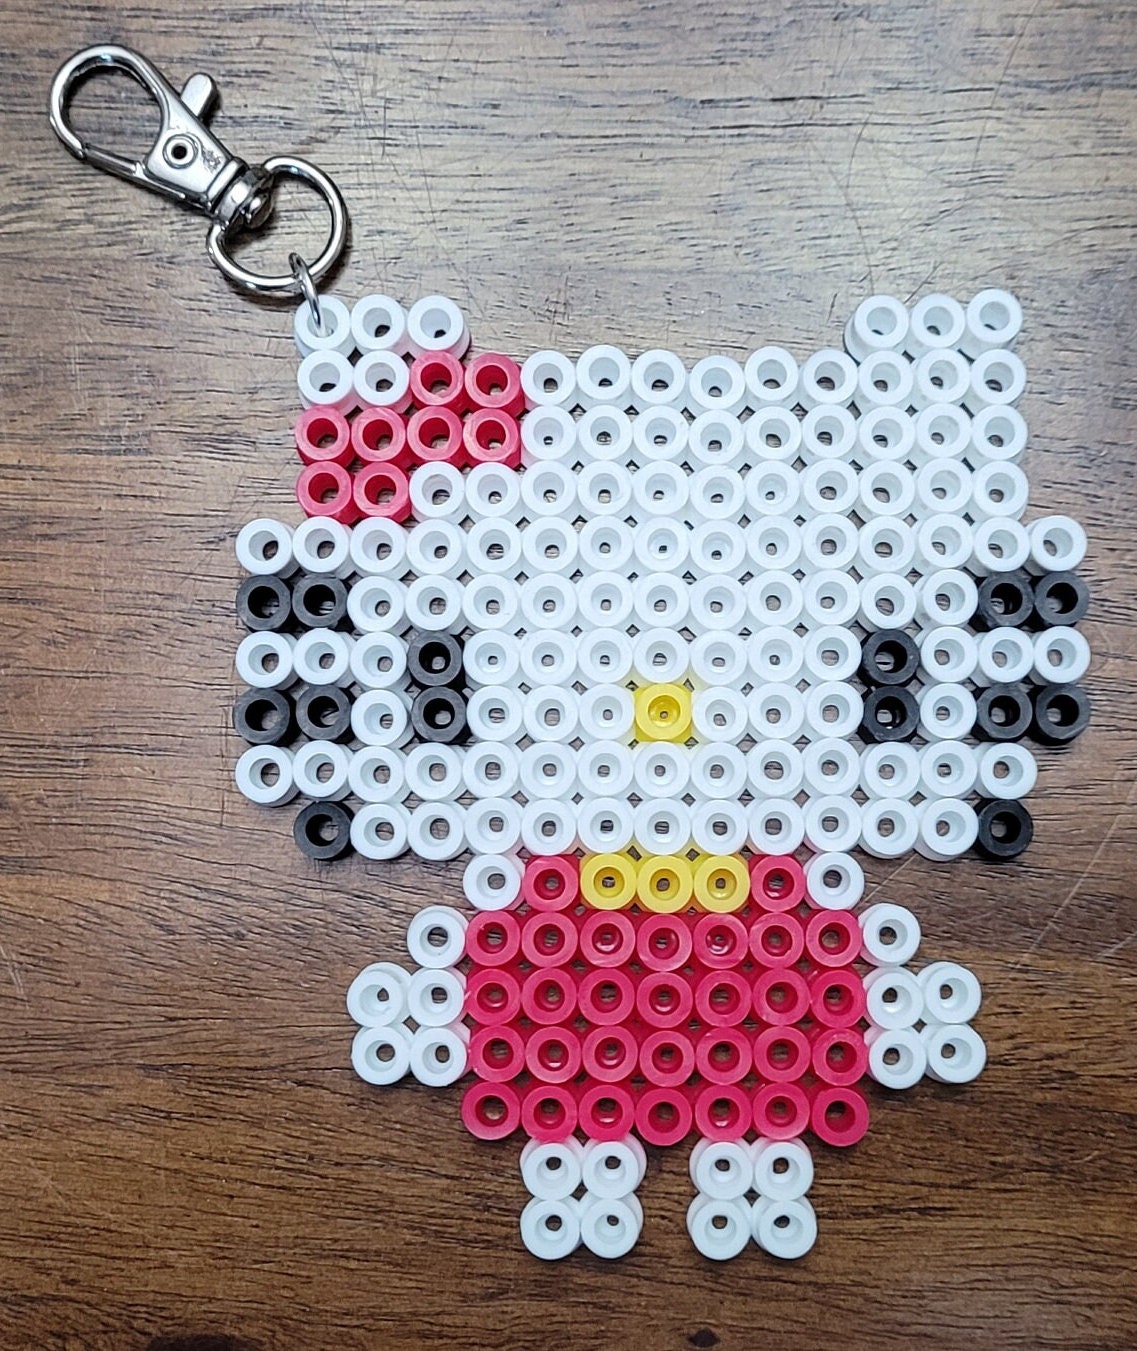 Diy Hello Kitty Perler Beads Keychain, How to make